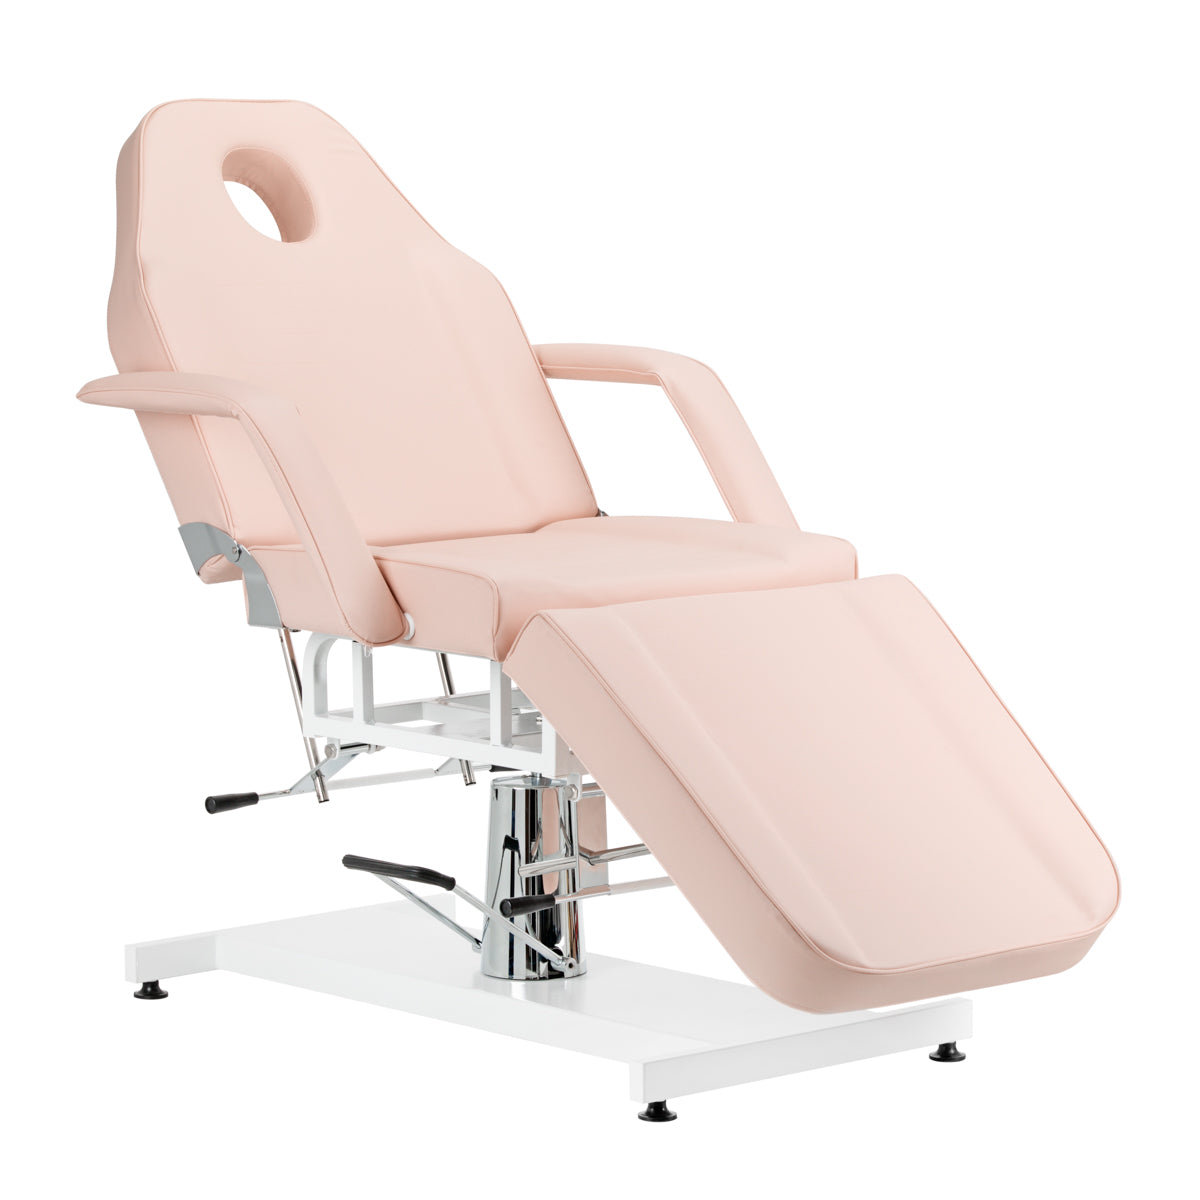 Hydraulic cosmetic chair Basic 210 pink